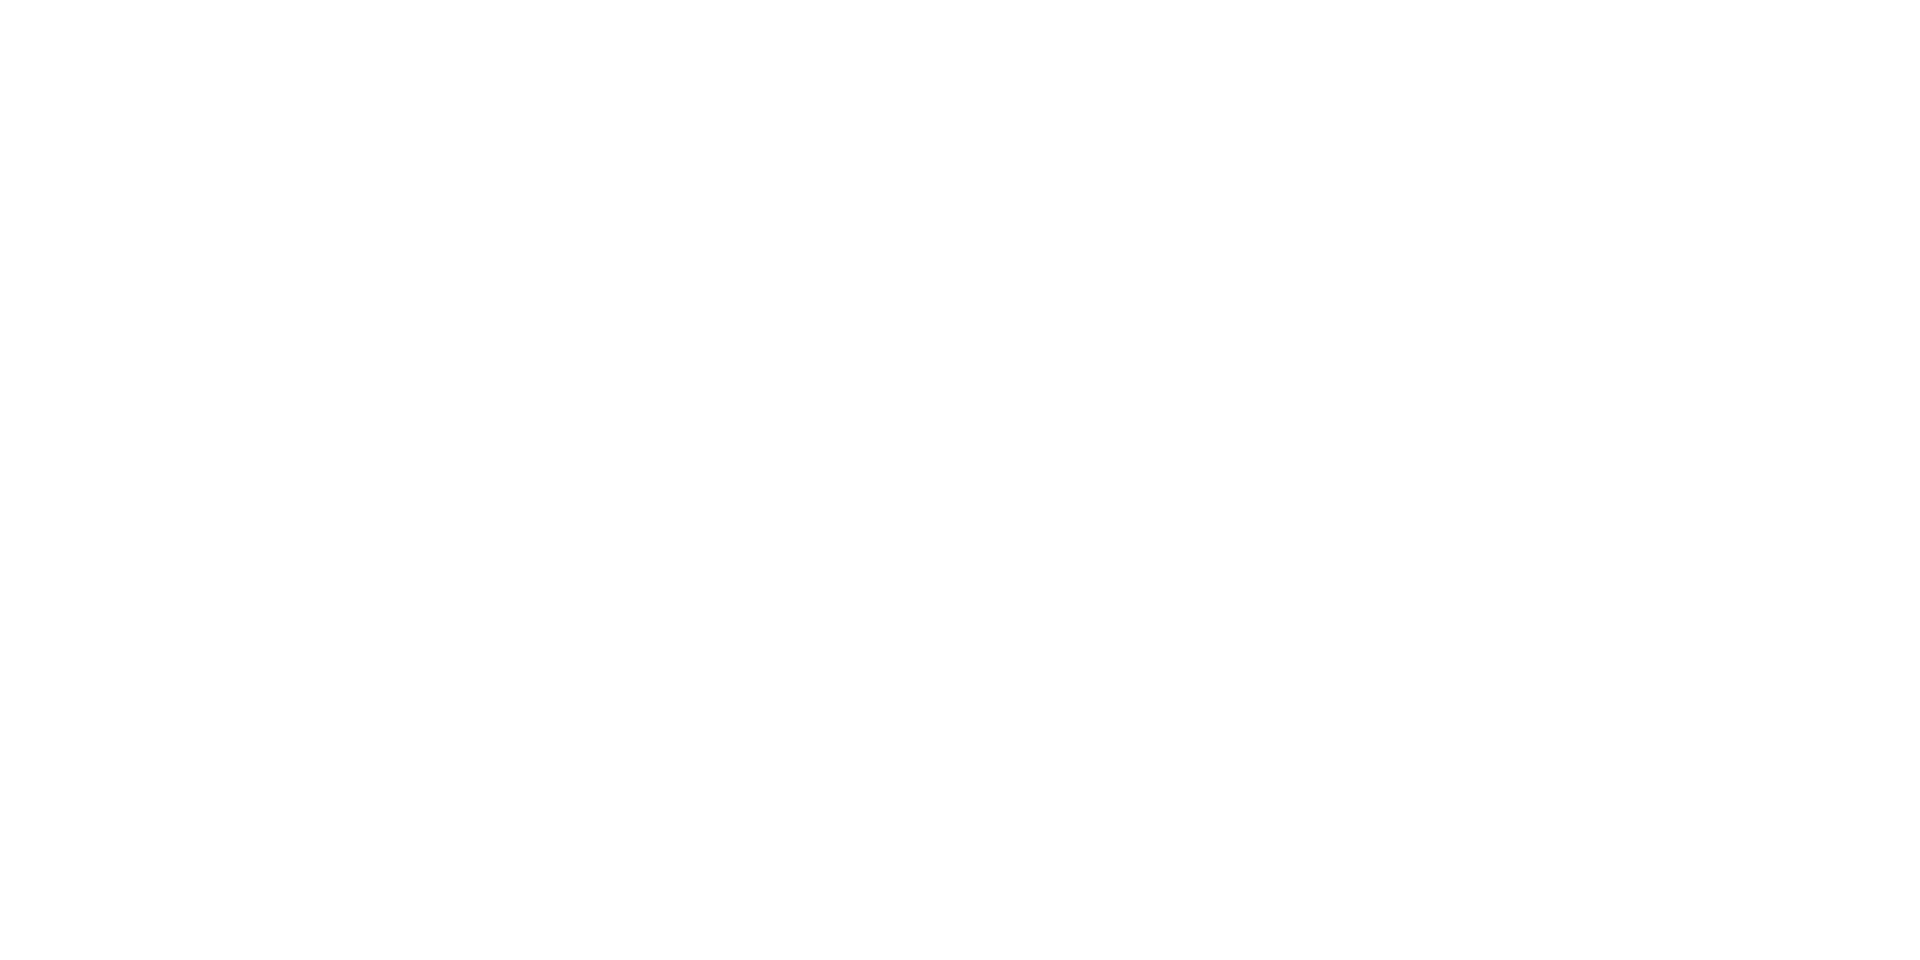 nouveau logo JDA bourgogne dijon